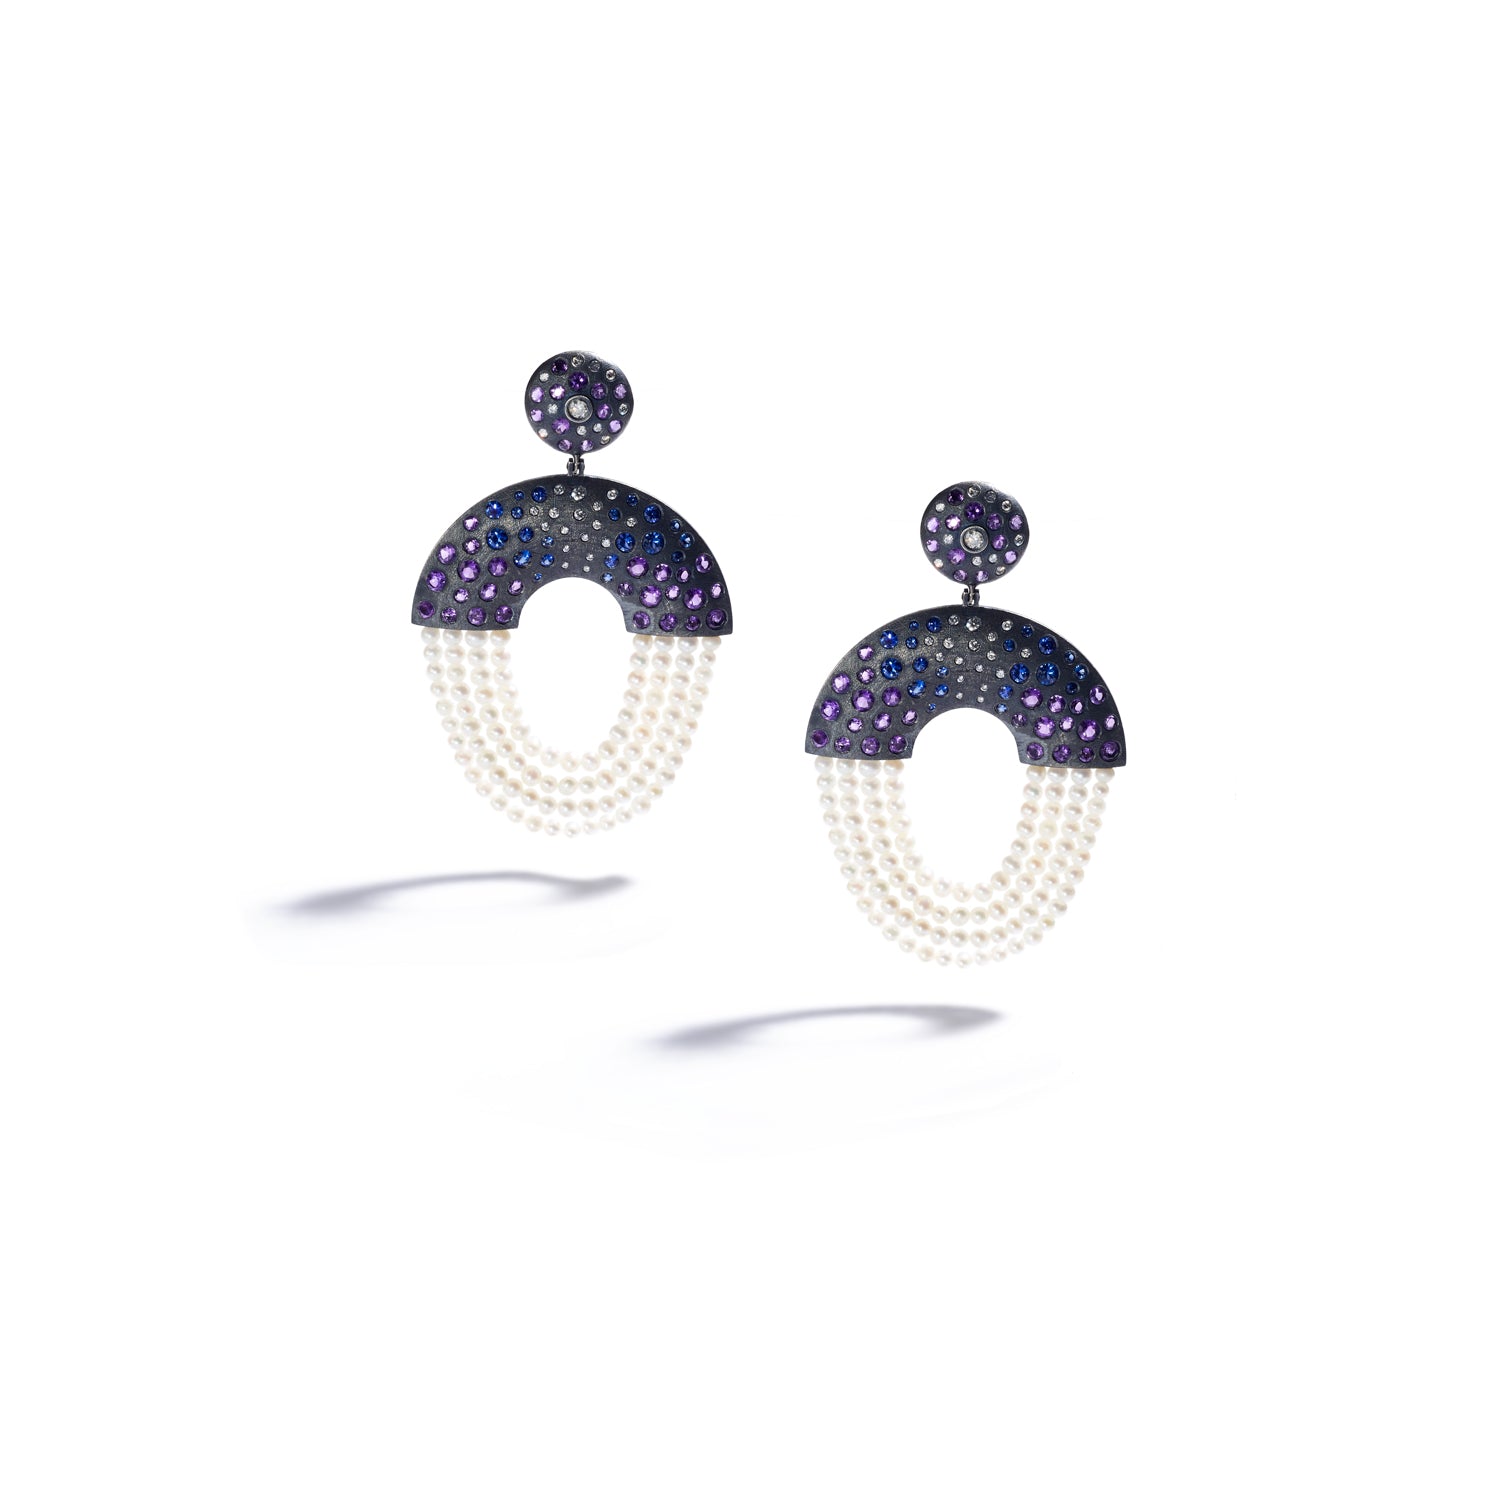 Amethyst, Sapphire, Diamond, and Pearl Earrings